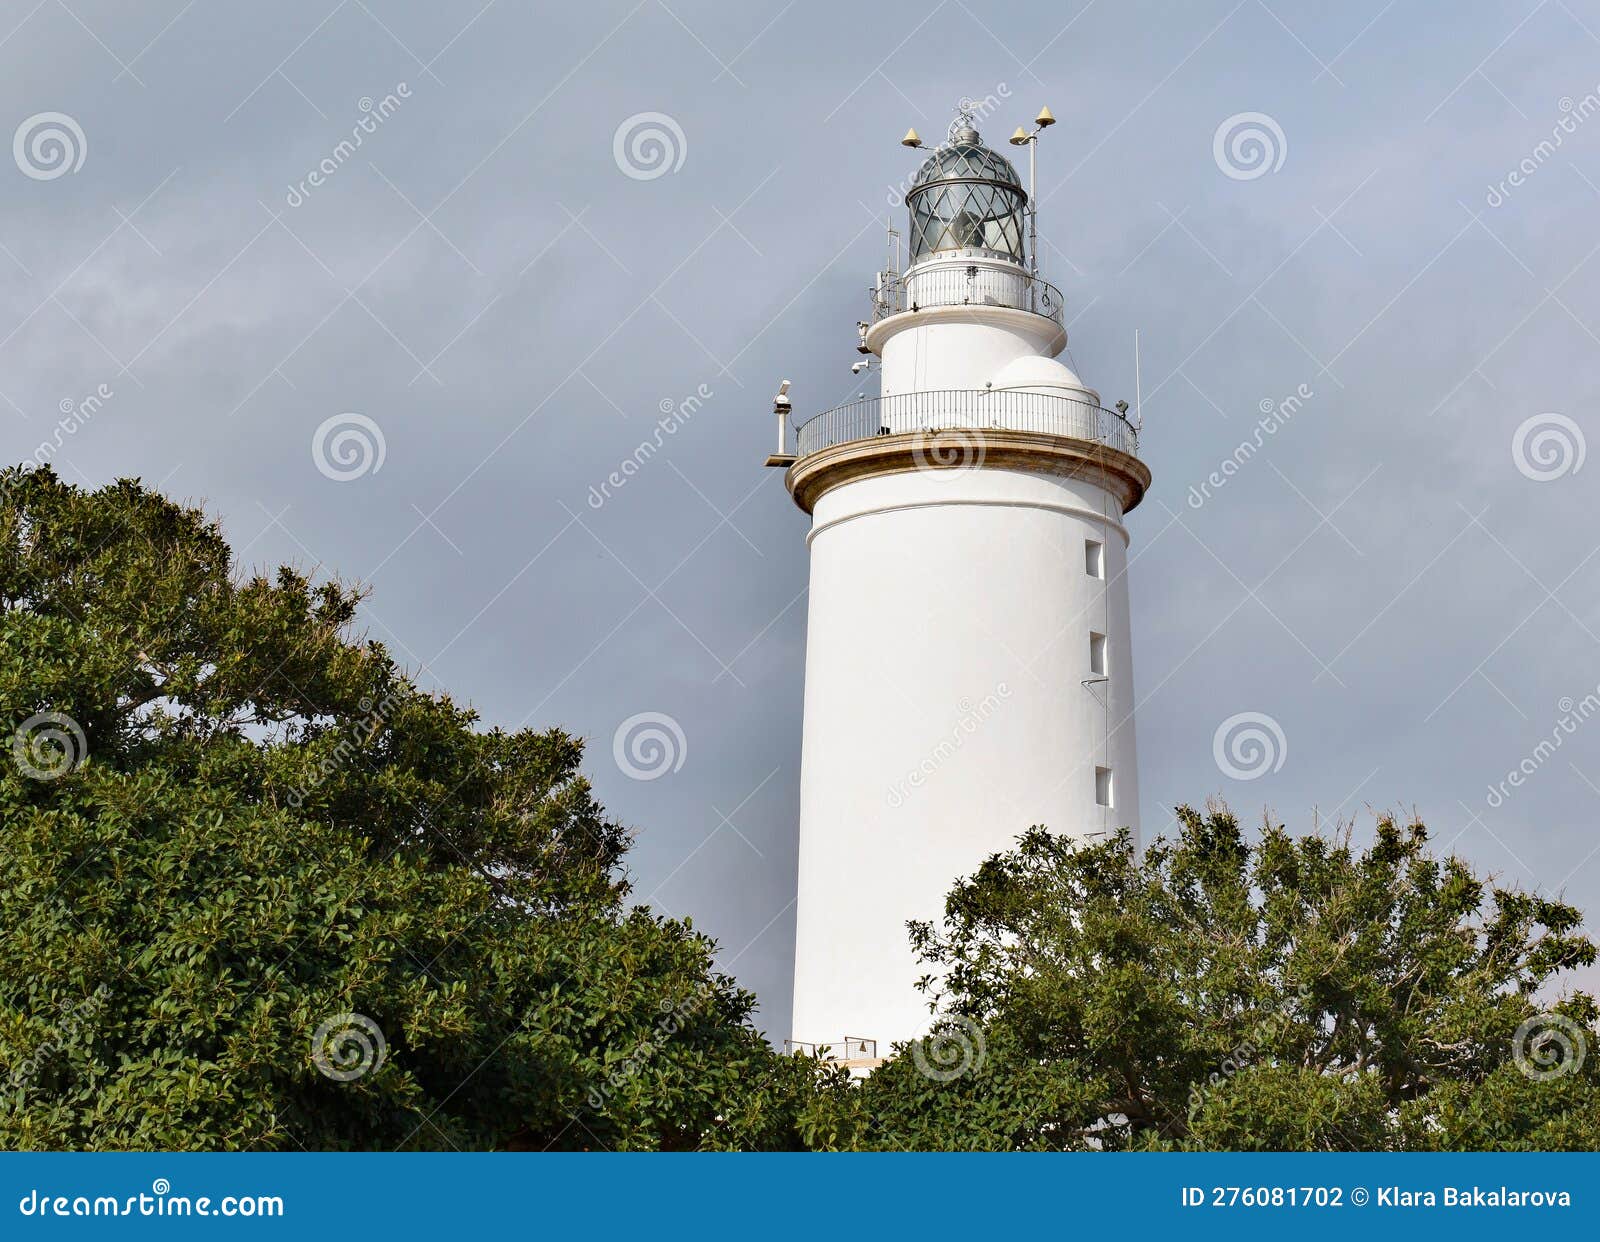 la farola lighthouse in malaga, an old coastal building in the harbour, spain